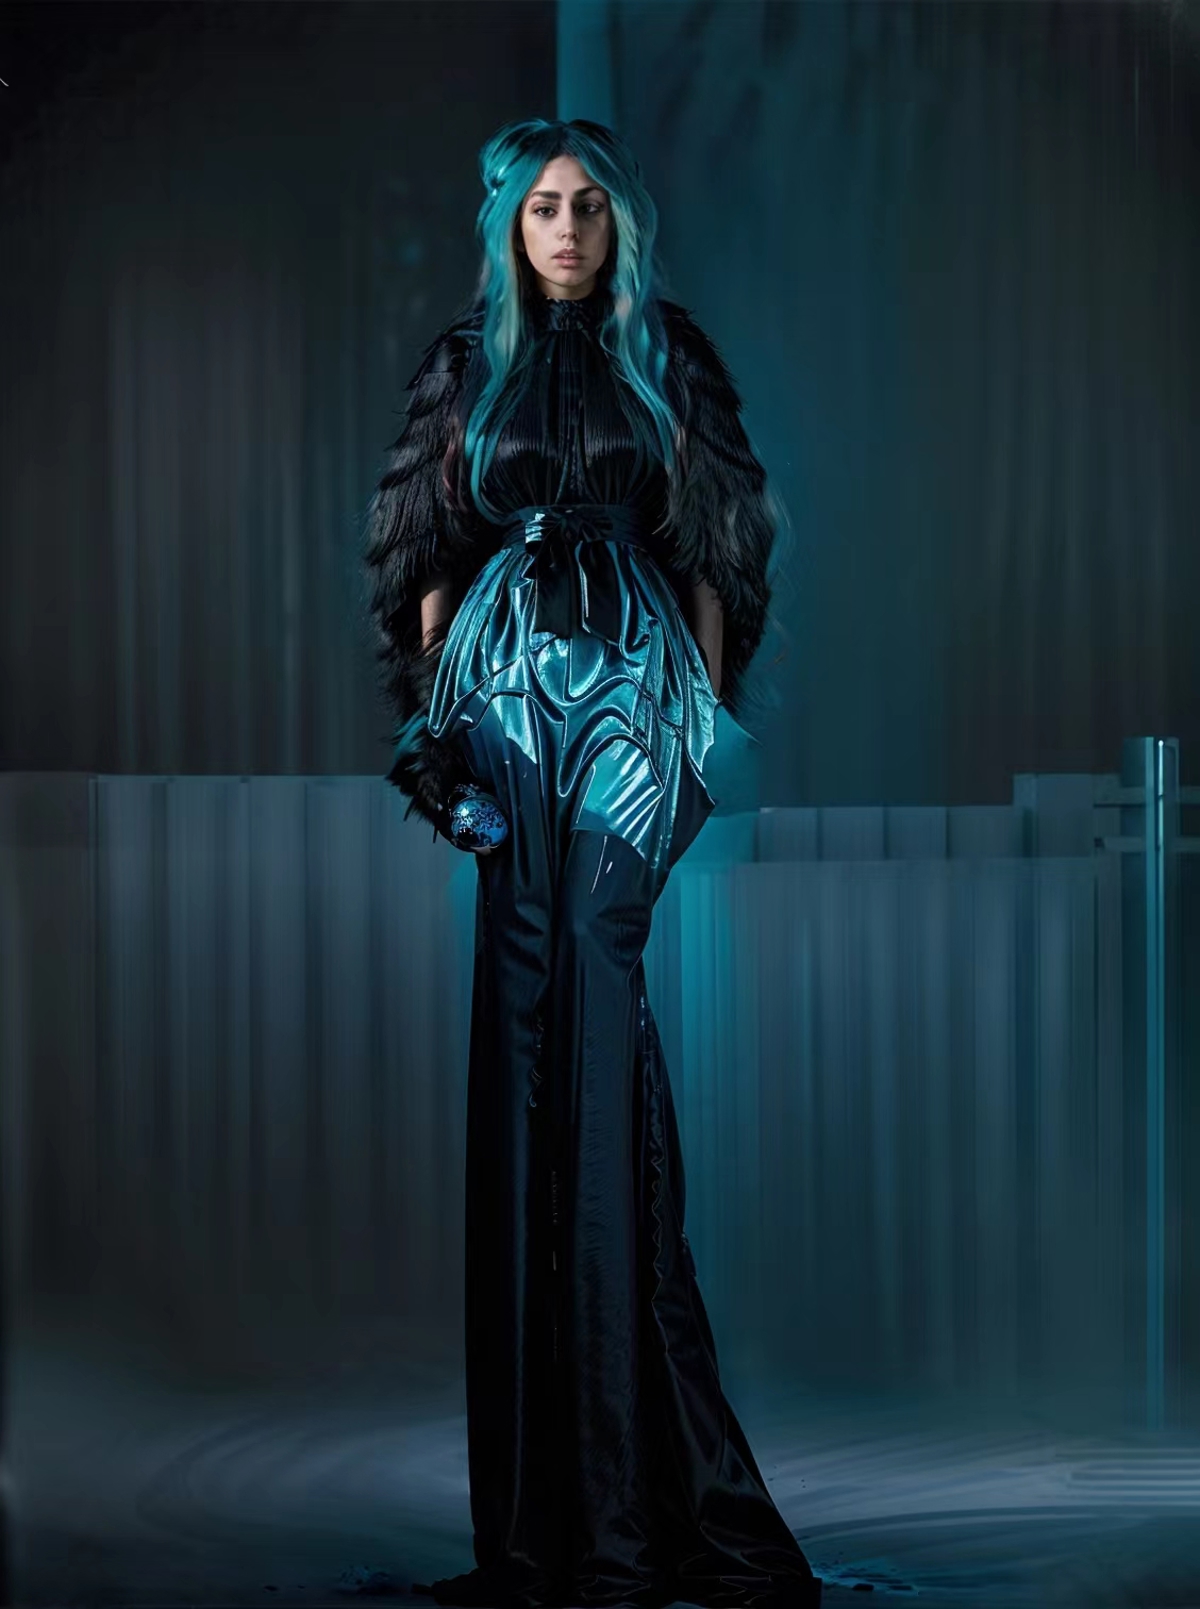 Lady Gaga (2008-2014) image by bhjfhj